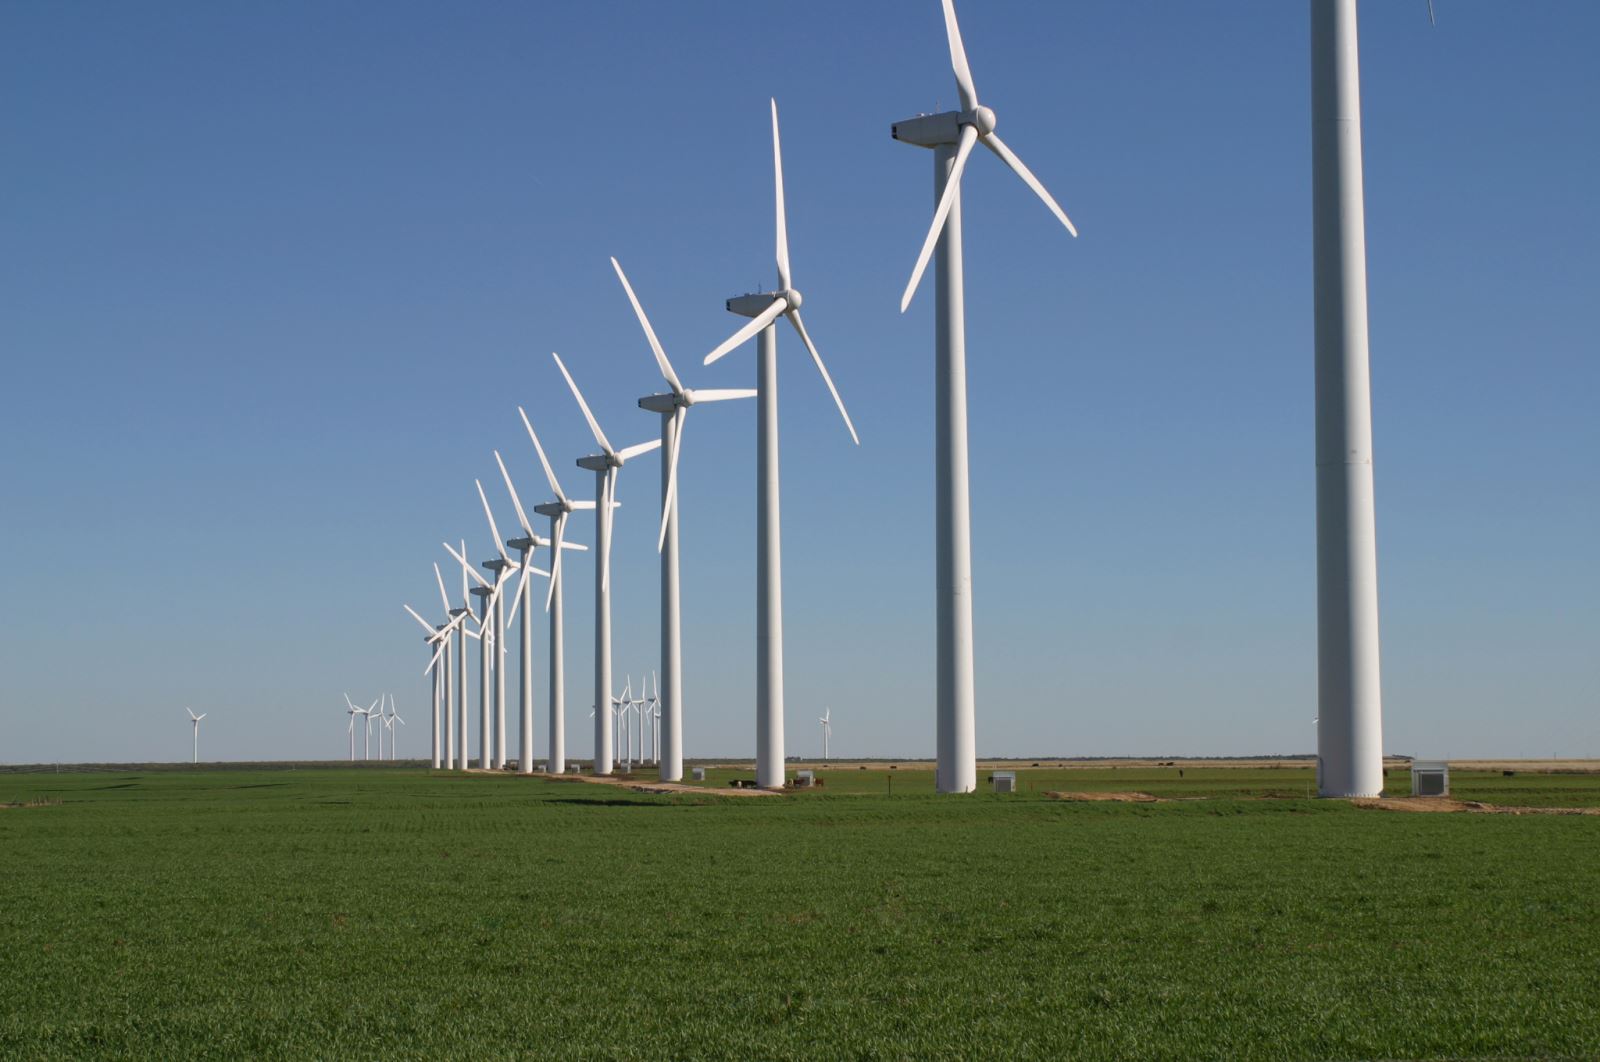 Do Wind Turbines Impact Property Values